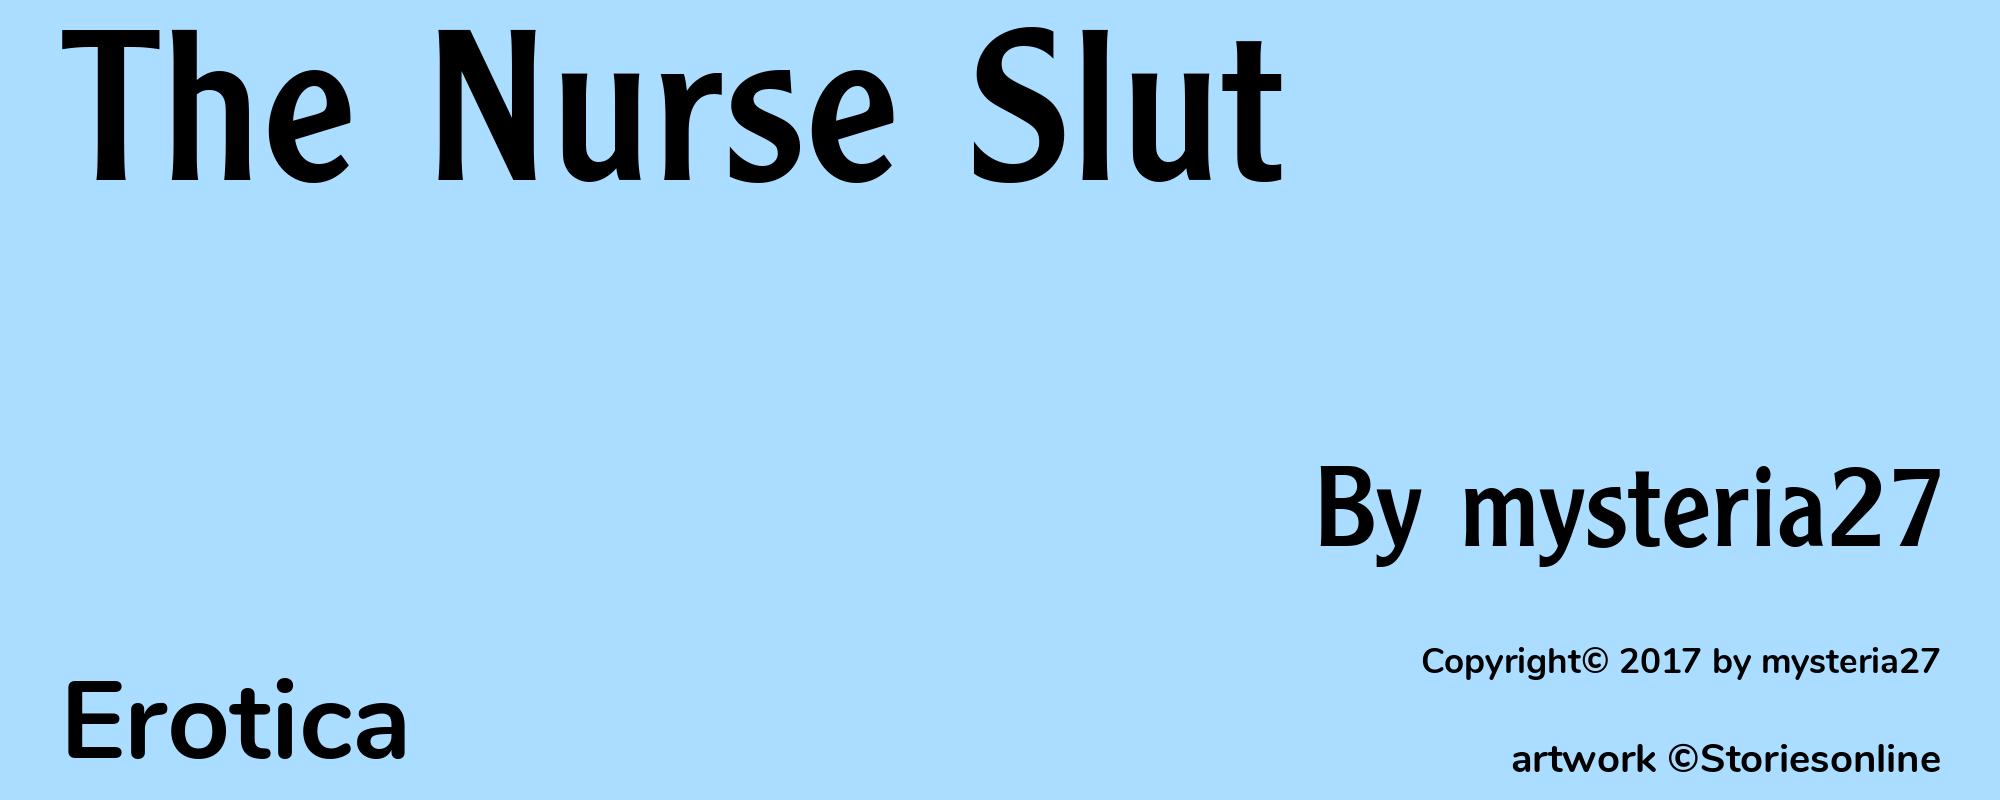 The Nurse Slut - Cover